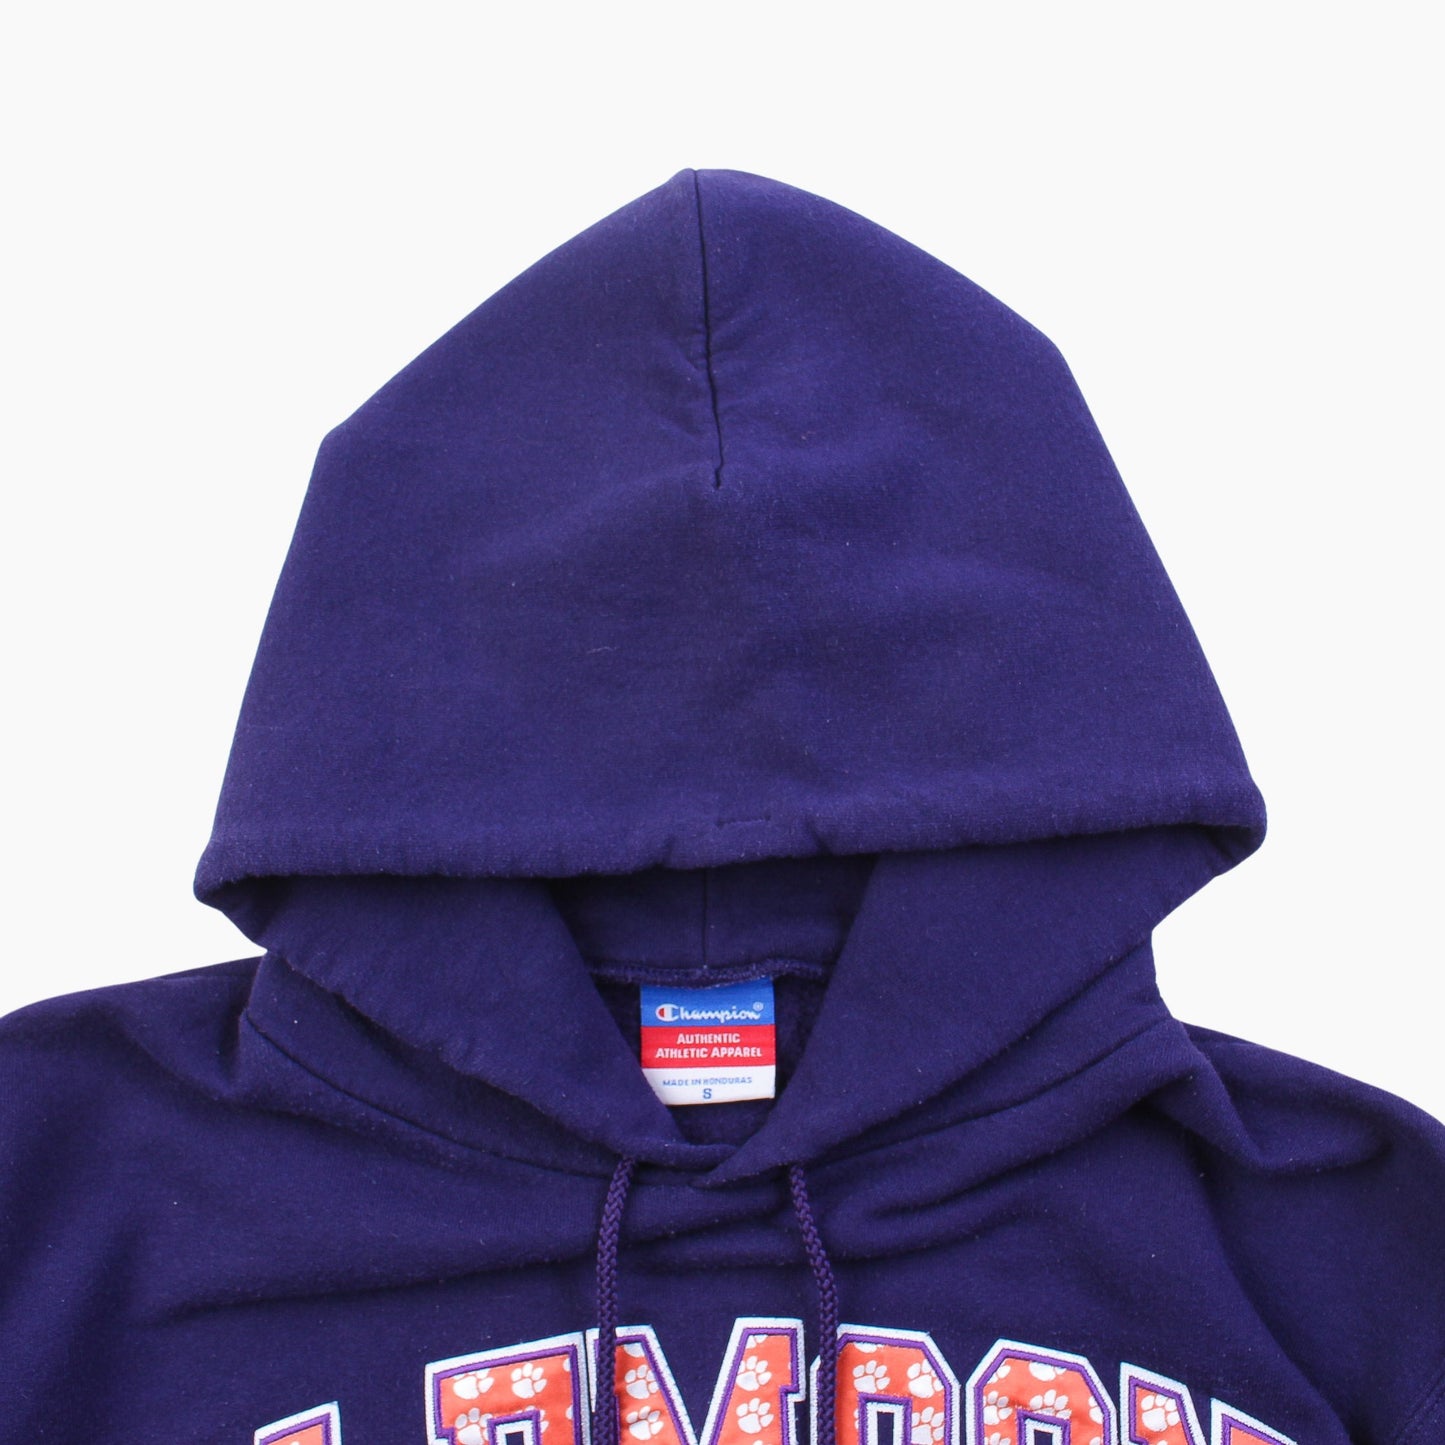 'Clemson' Champion Hooded Sweatshirt - American Madness